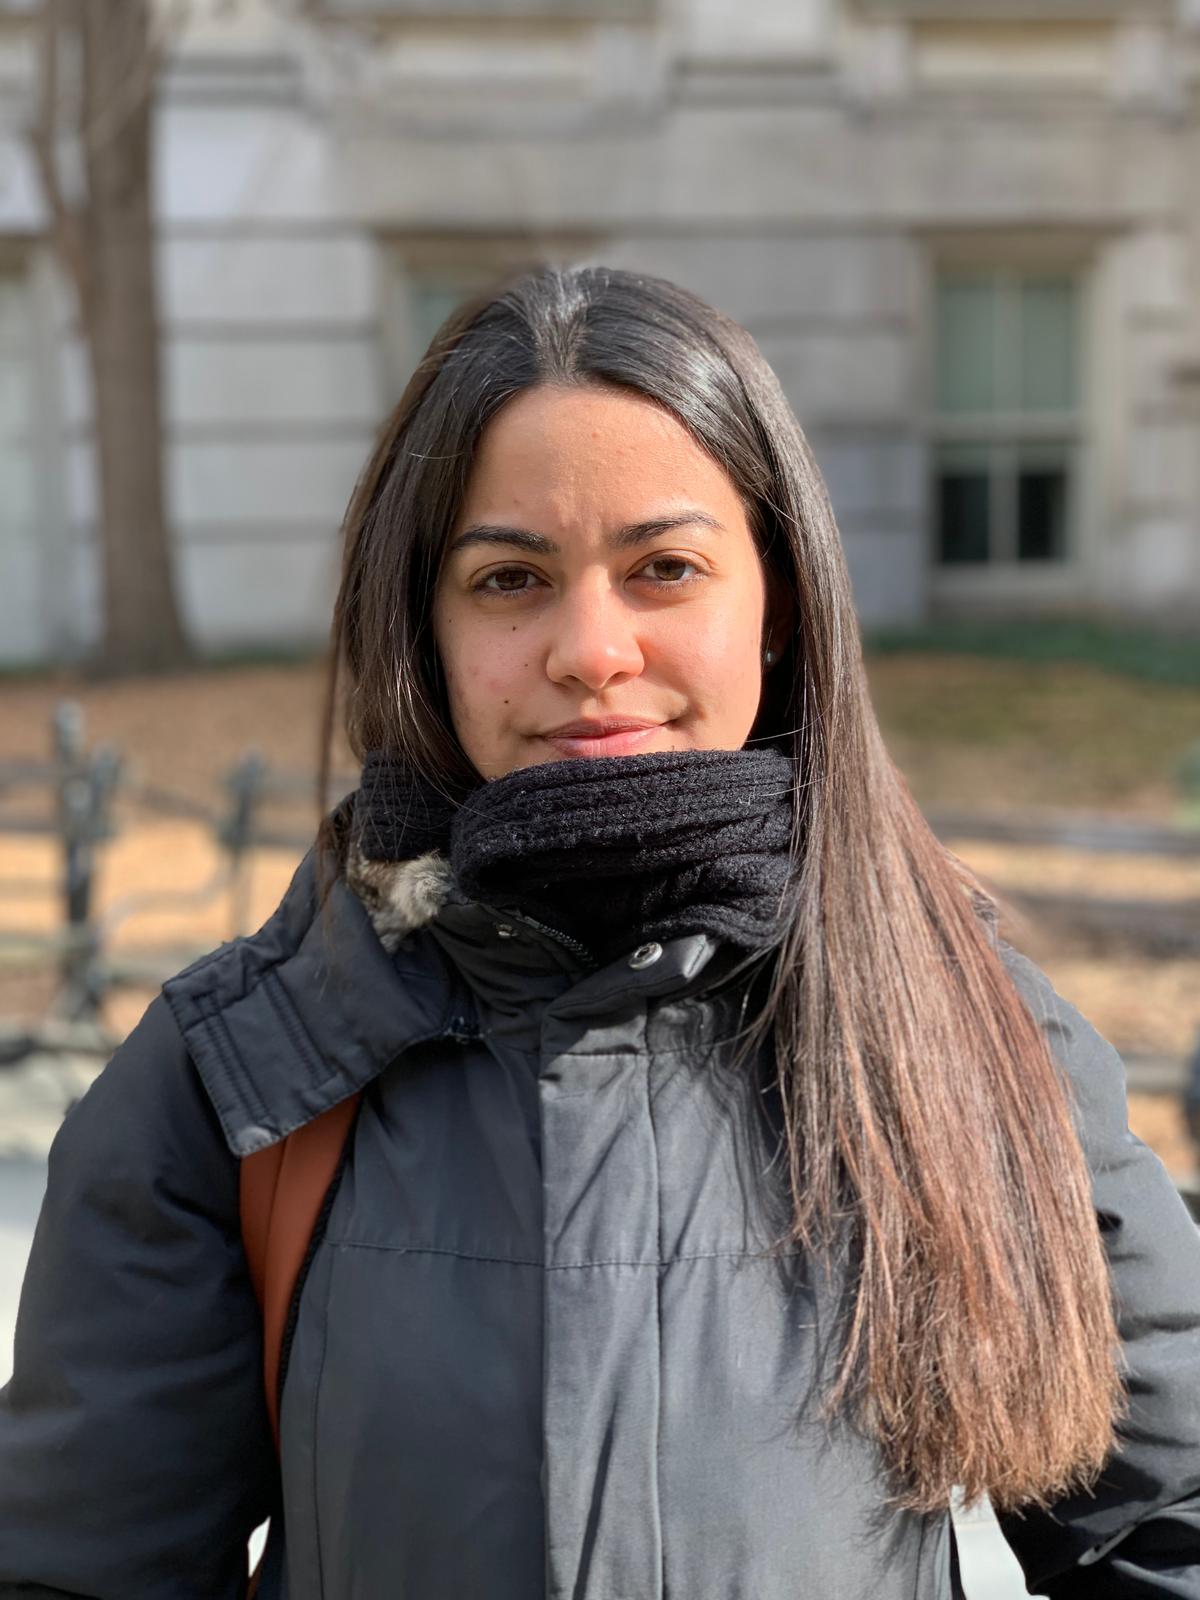 Chiara Deiana in New York on Feb. 25, 2019. (Stuart Liess/The Epoch Times)